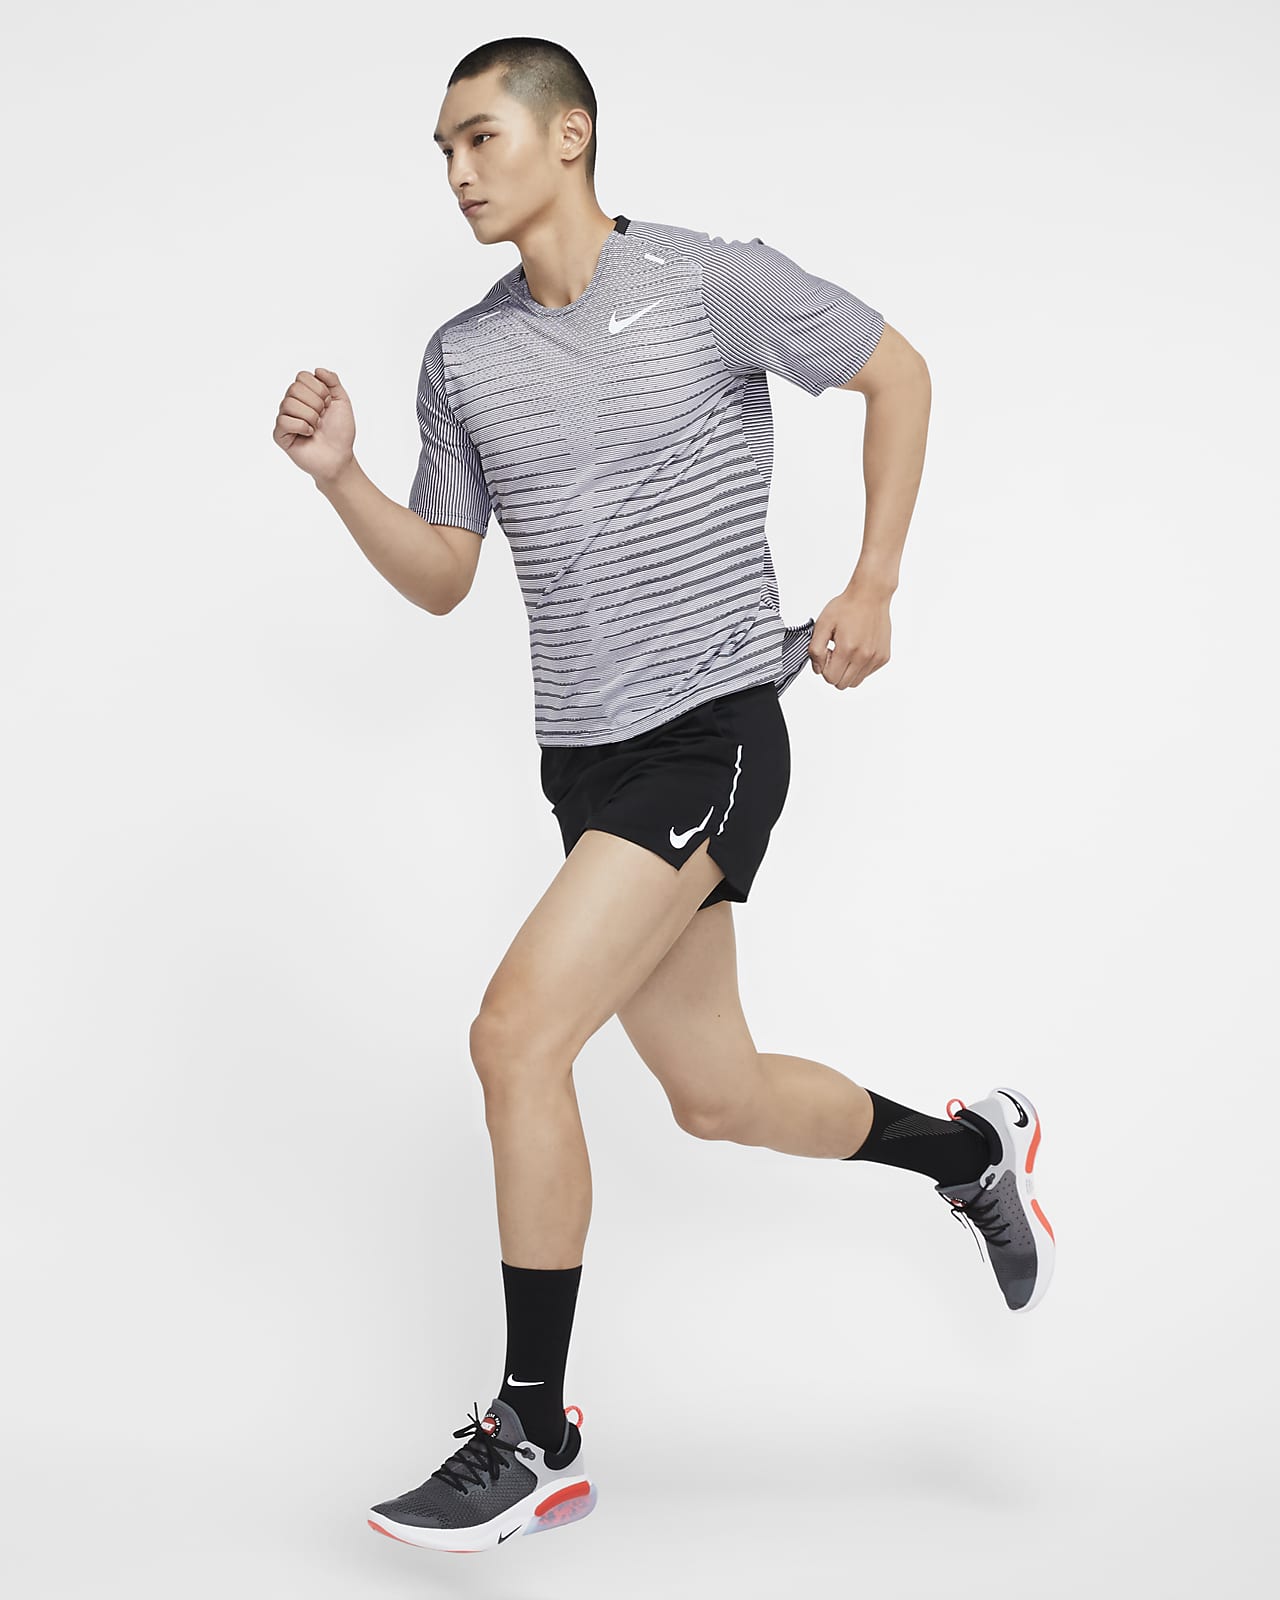 Nike TechKnit Future Fast Men's Running 